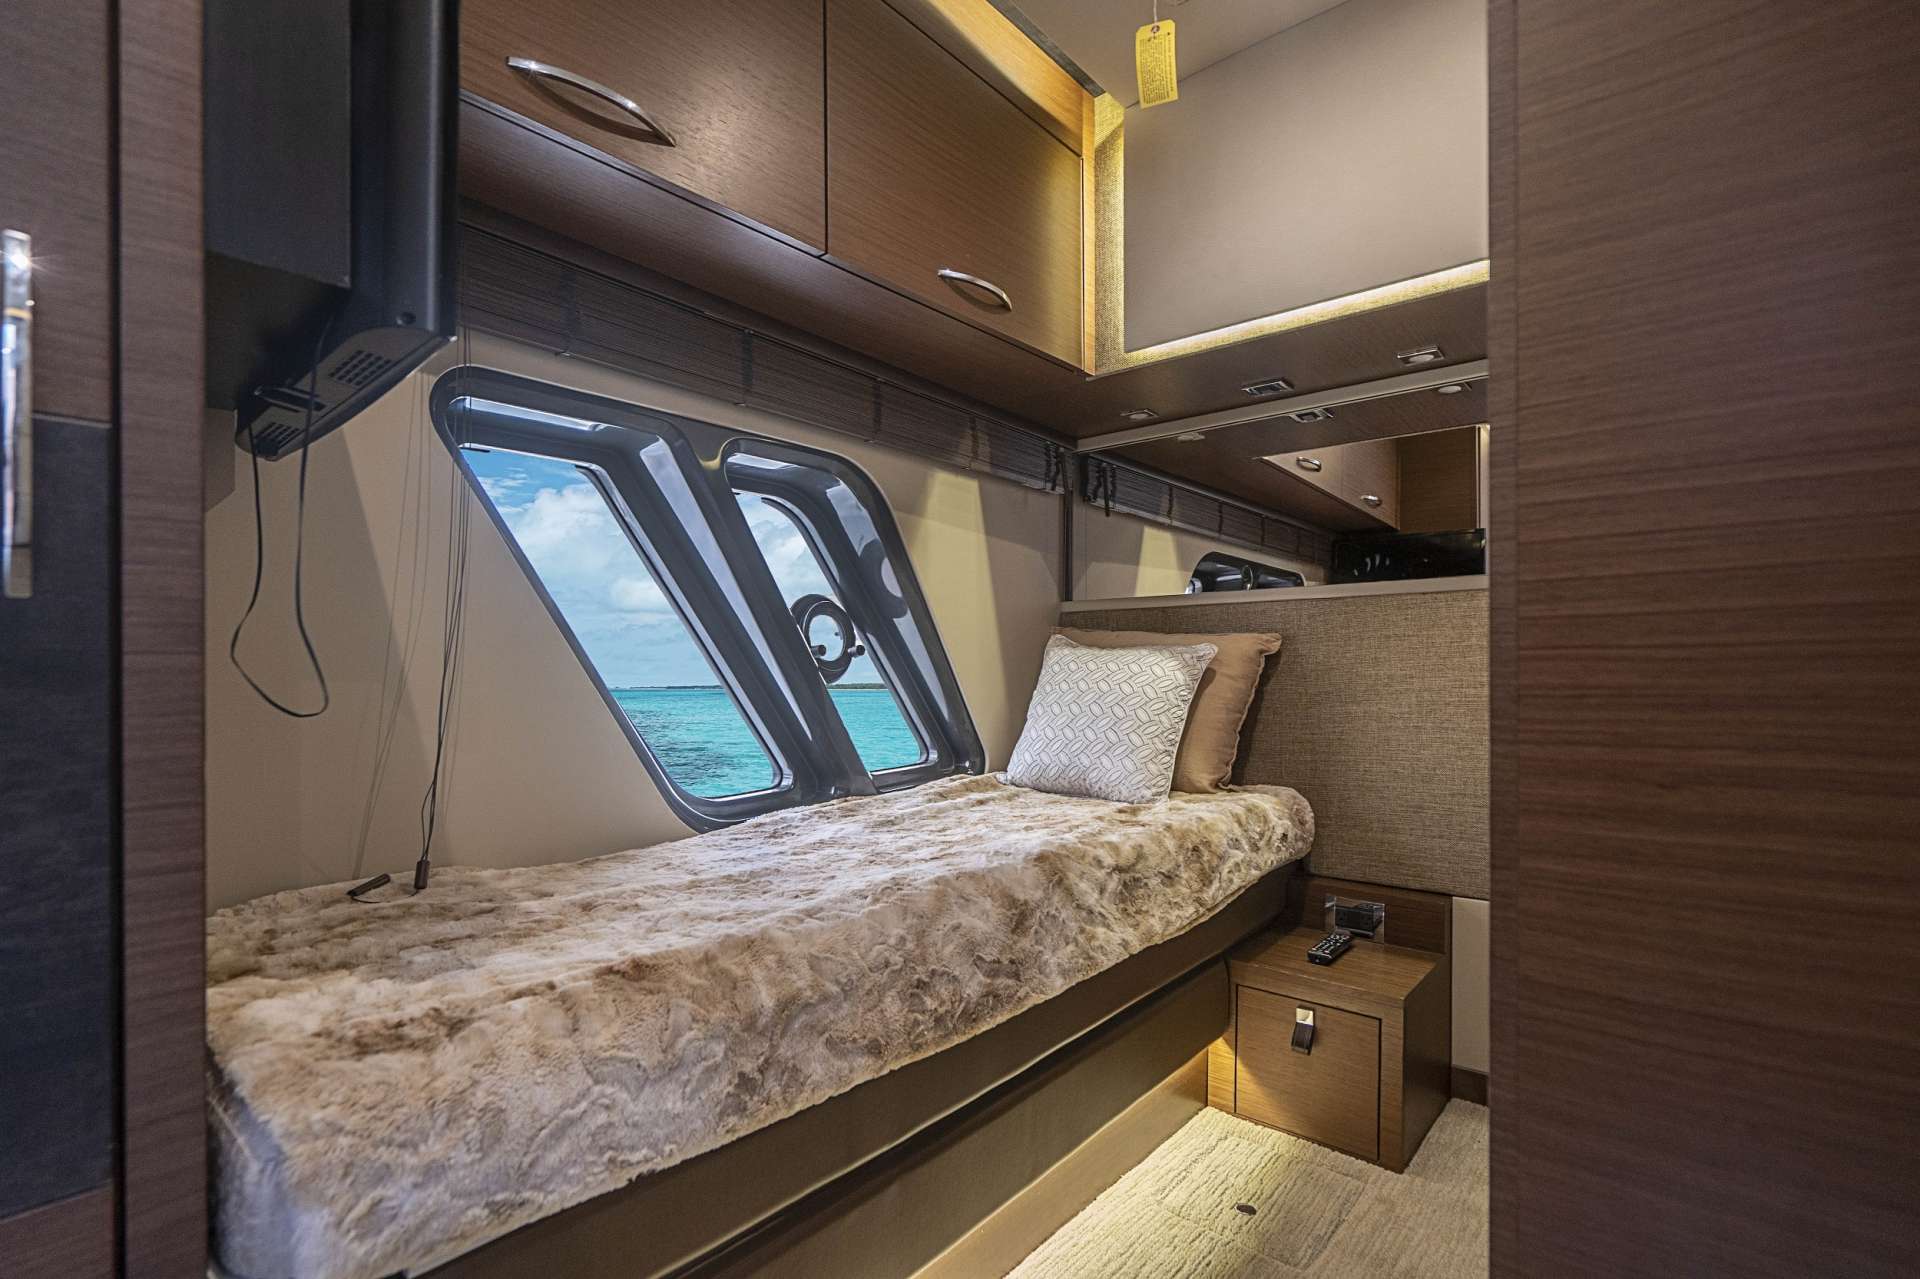 Motor Yacht 'MR. GV' Single Stateroom, 5 PAX, 65.00 Ft, 19.00 Meters, Built 2016, Sea Ray